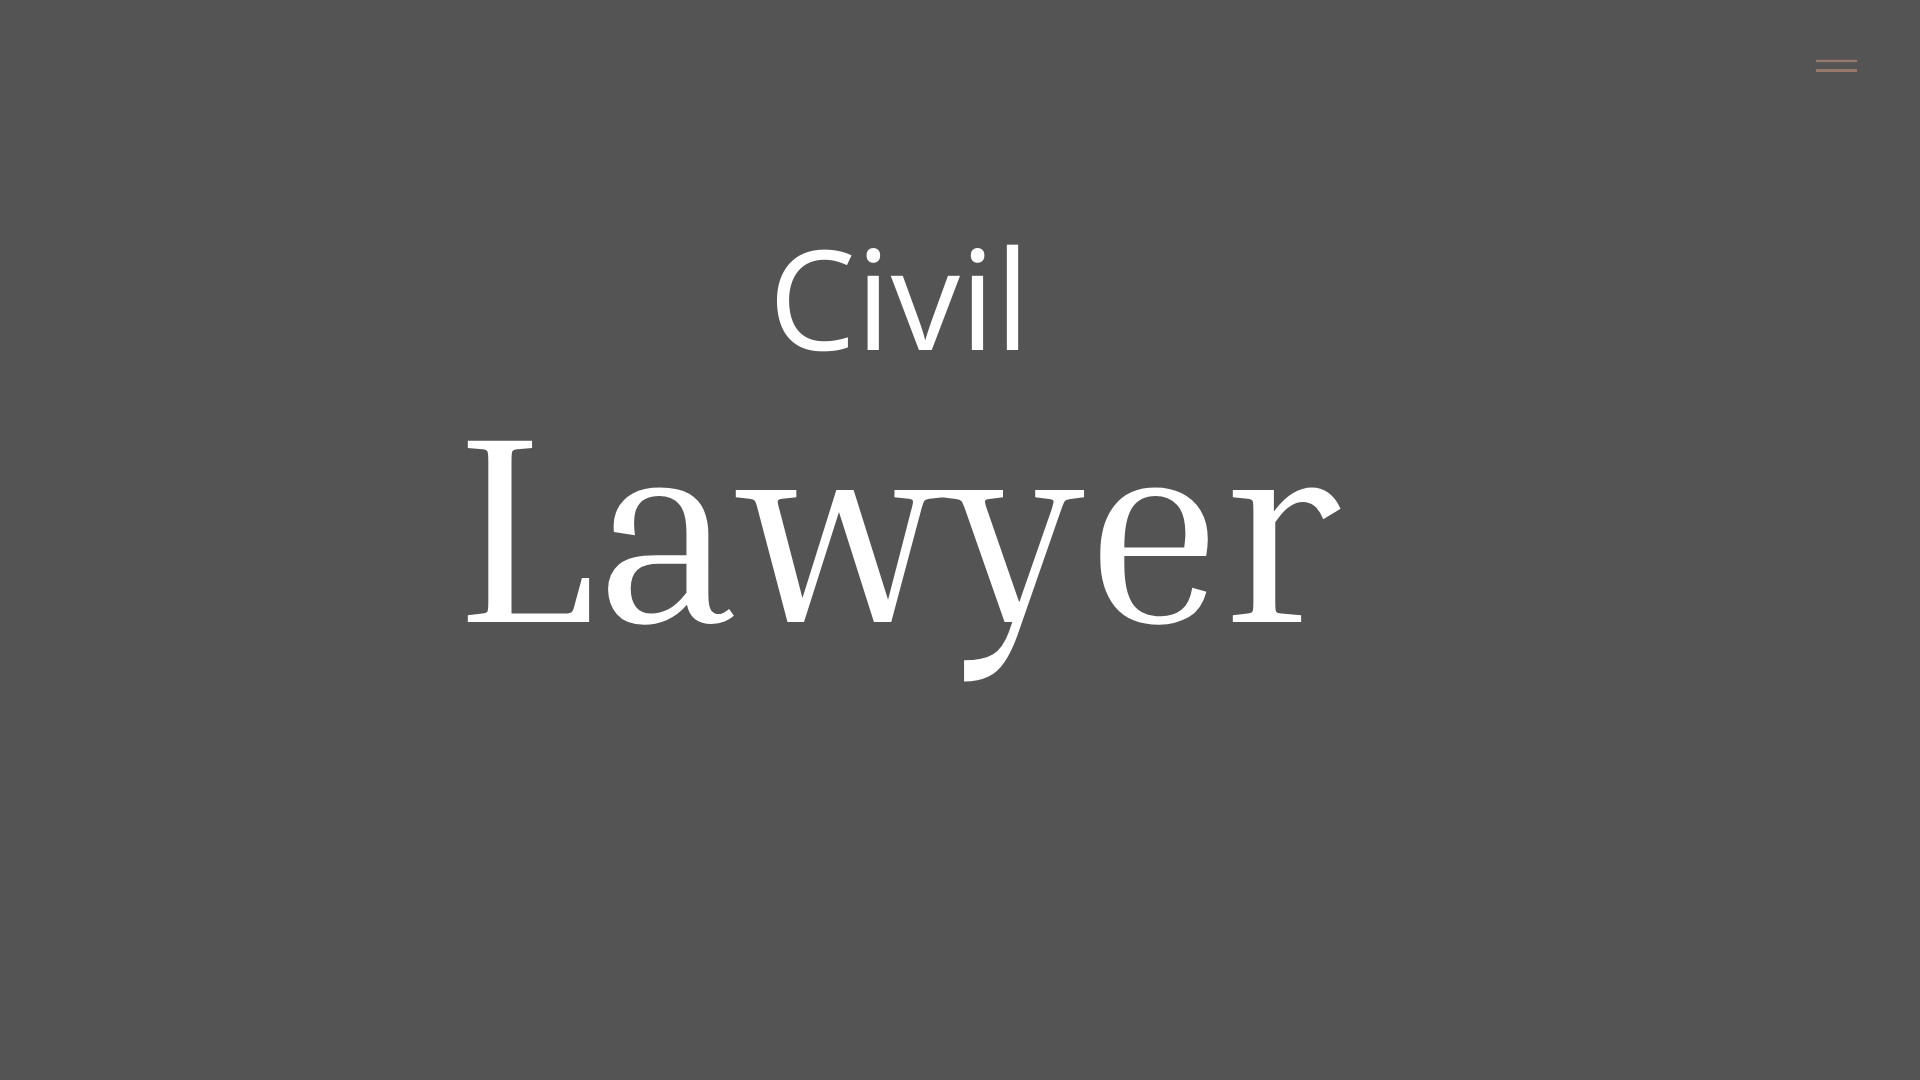 Pankaj Kumar & Co. | Excellent Civil Lawyer in Rohini Court | Call @ 8800543454 for instant consultation